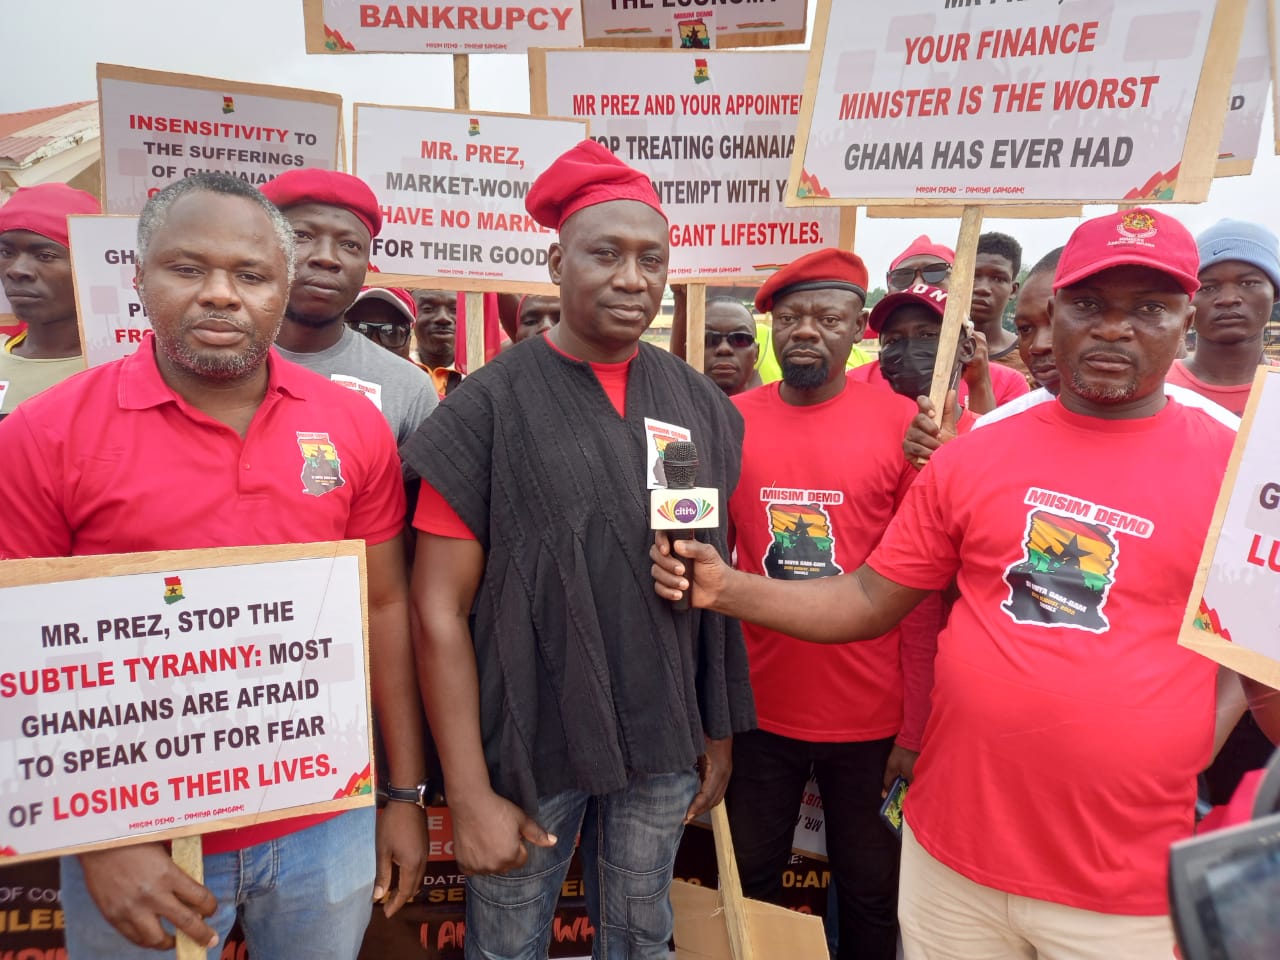 Demo held in Tamale to protest ‘hardship’ in Ghana